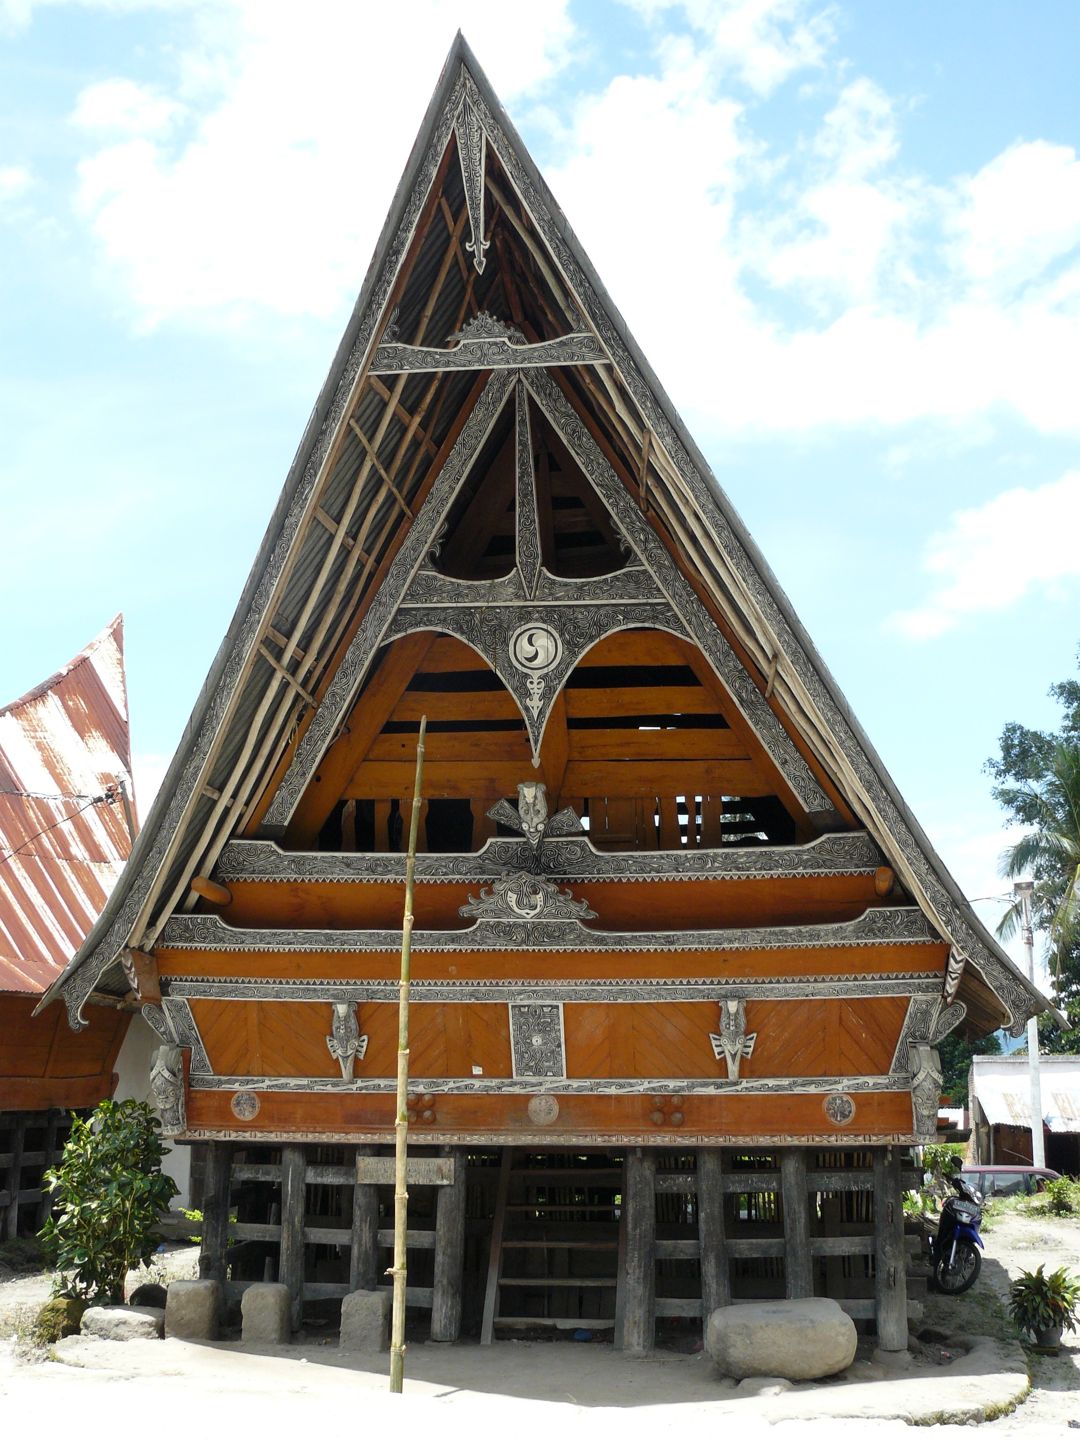 Rumah Balai BatakToba rumah adat sumatera utara